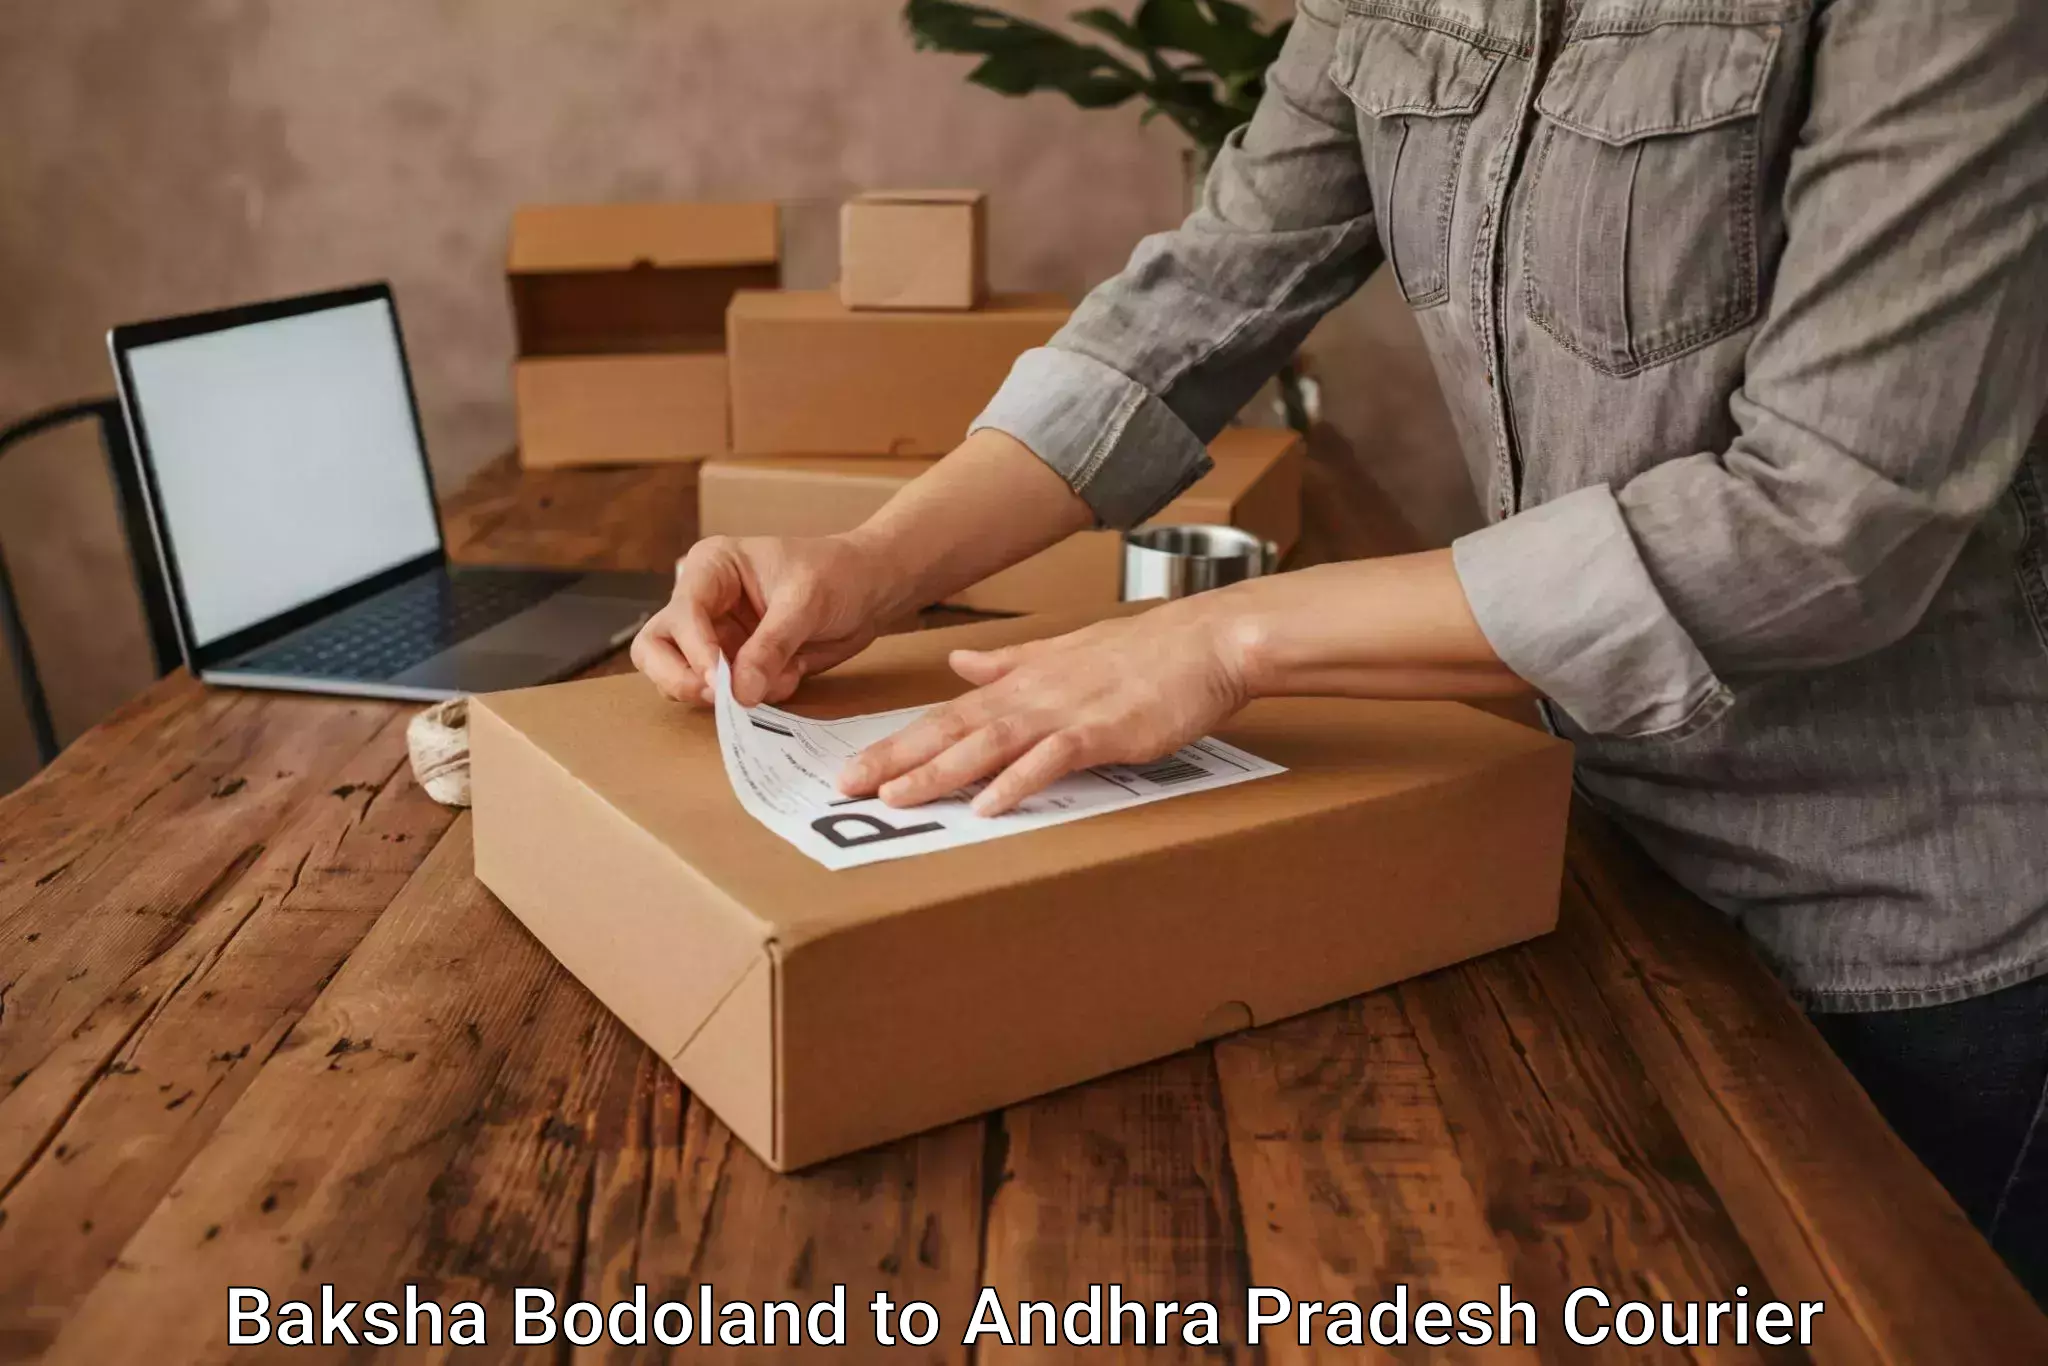 Small business couriers Baksha Bodoland to Tirupati